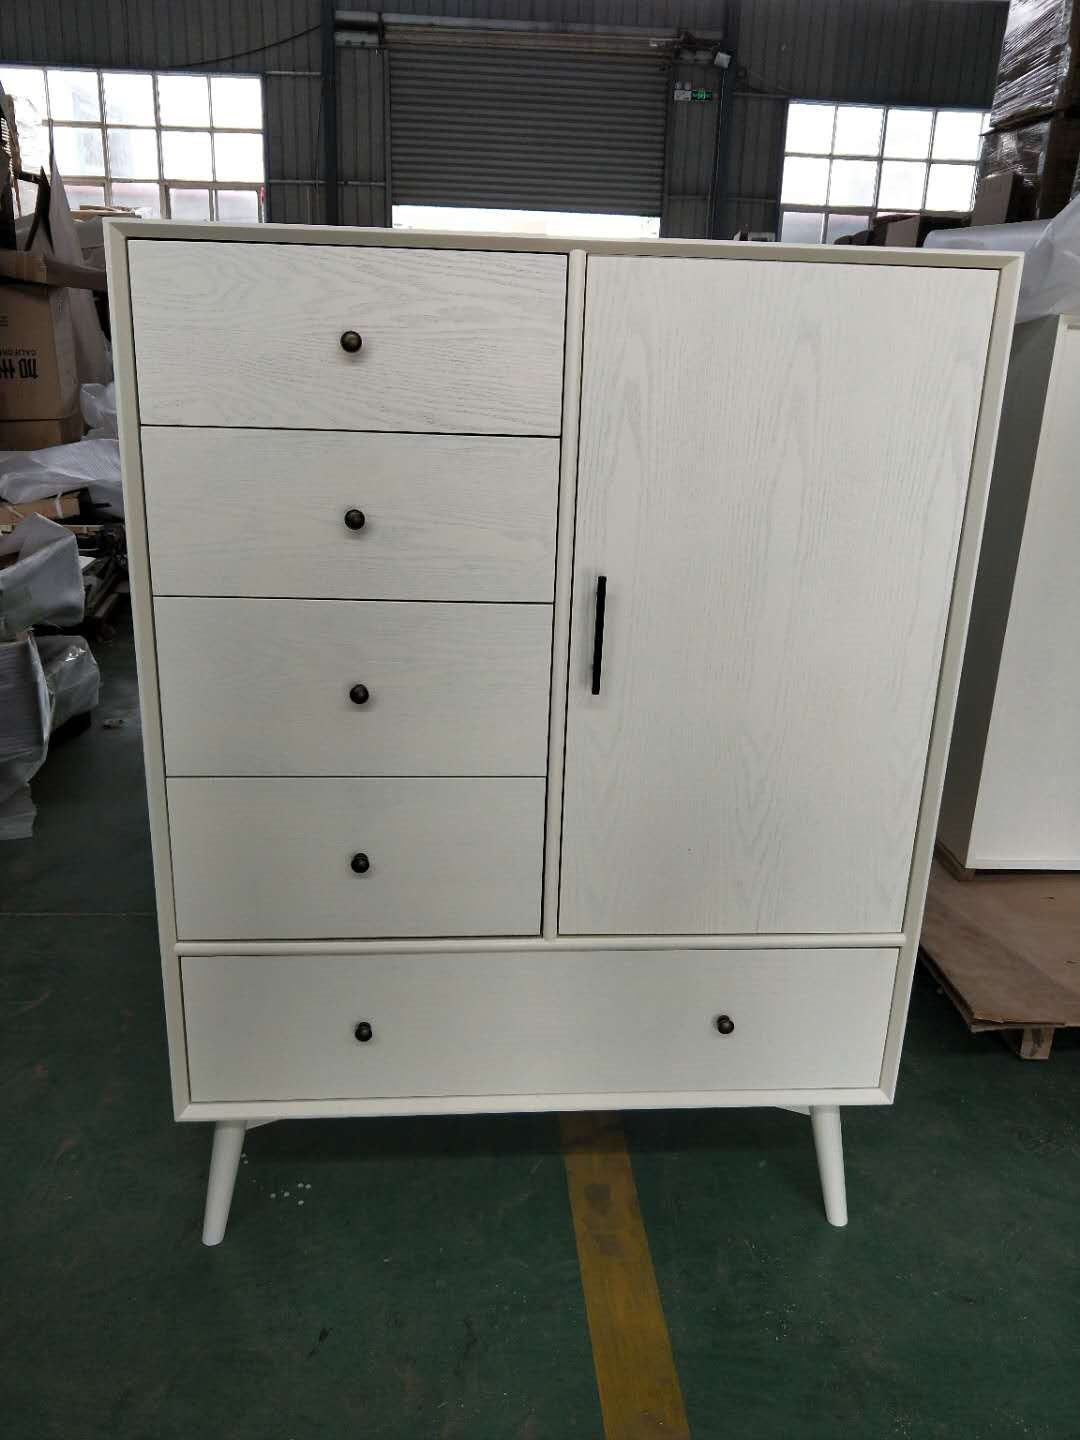 Mida Ash Veneer Wardrobe (Cabinet) , white color in stock - CLEARANCE SALE